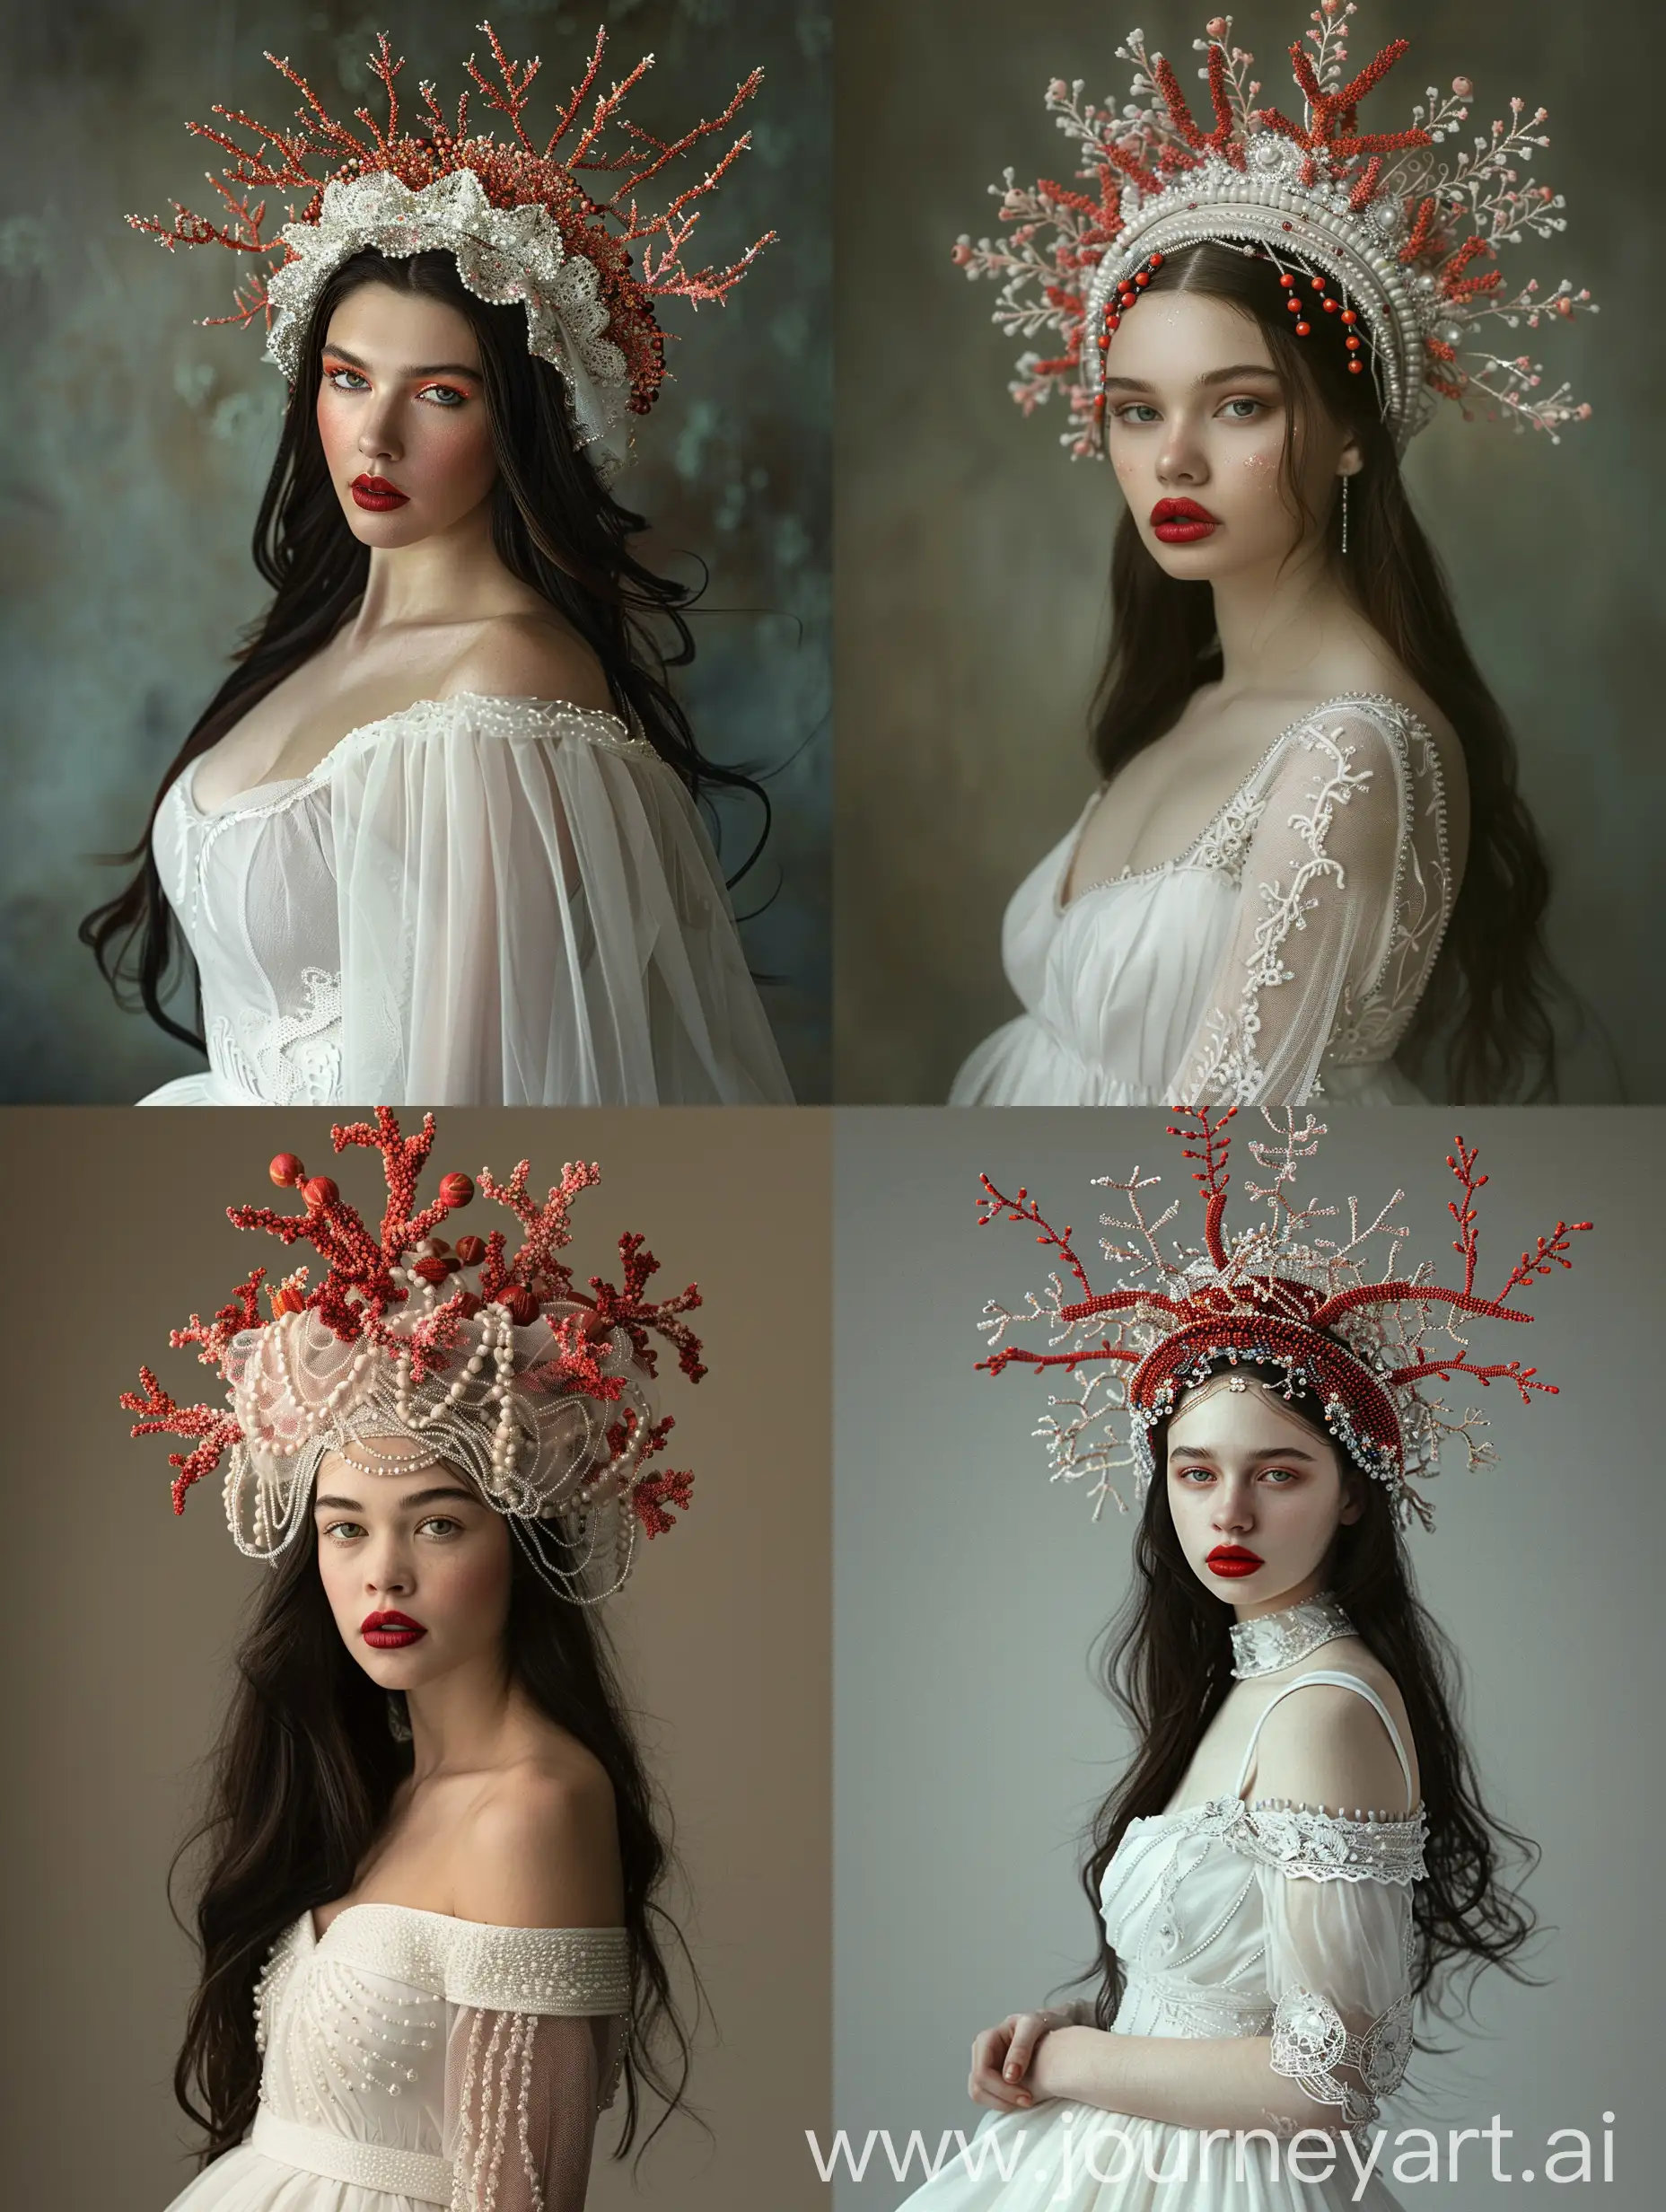 Enchanting-Aristocratic-Woman-in-Coral-Headdress-Portrait